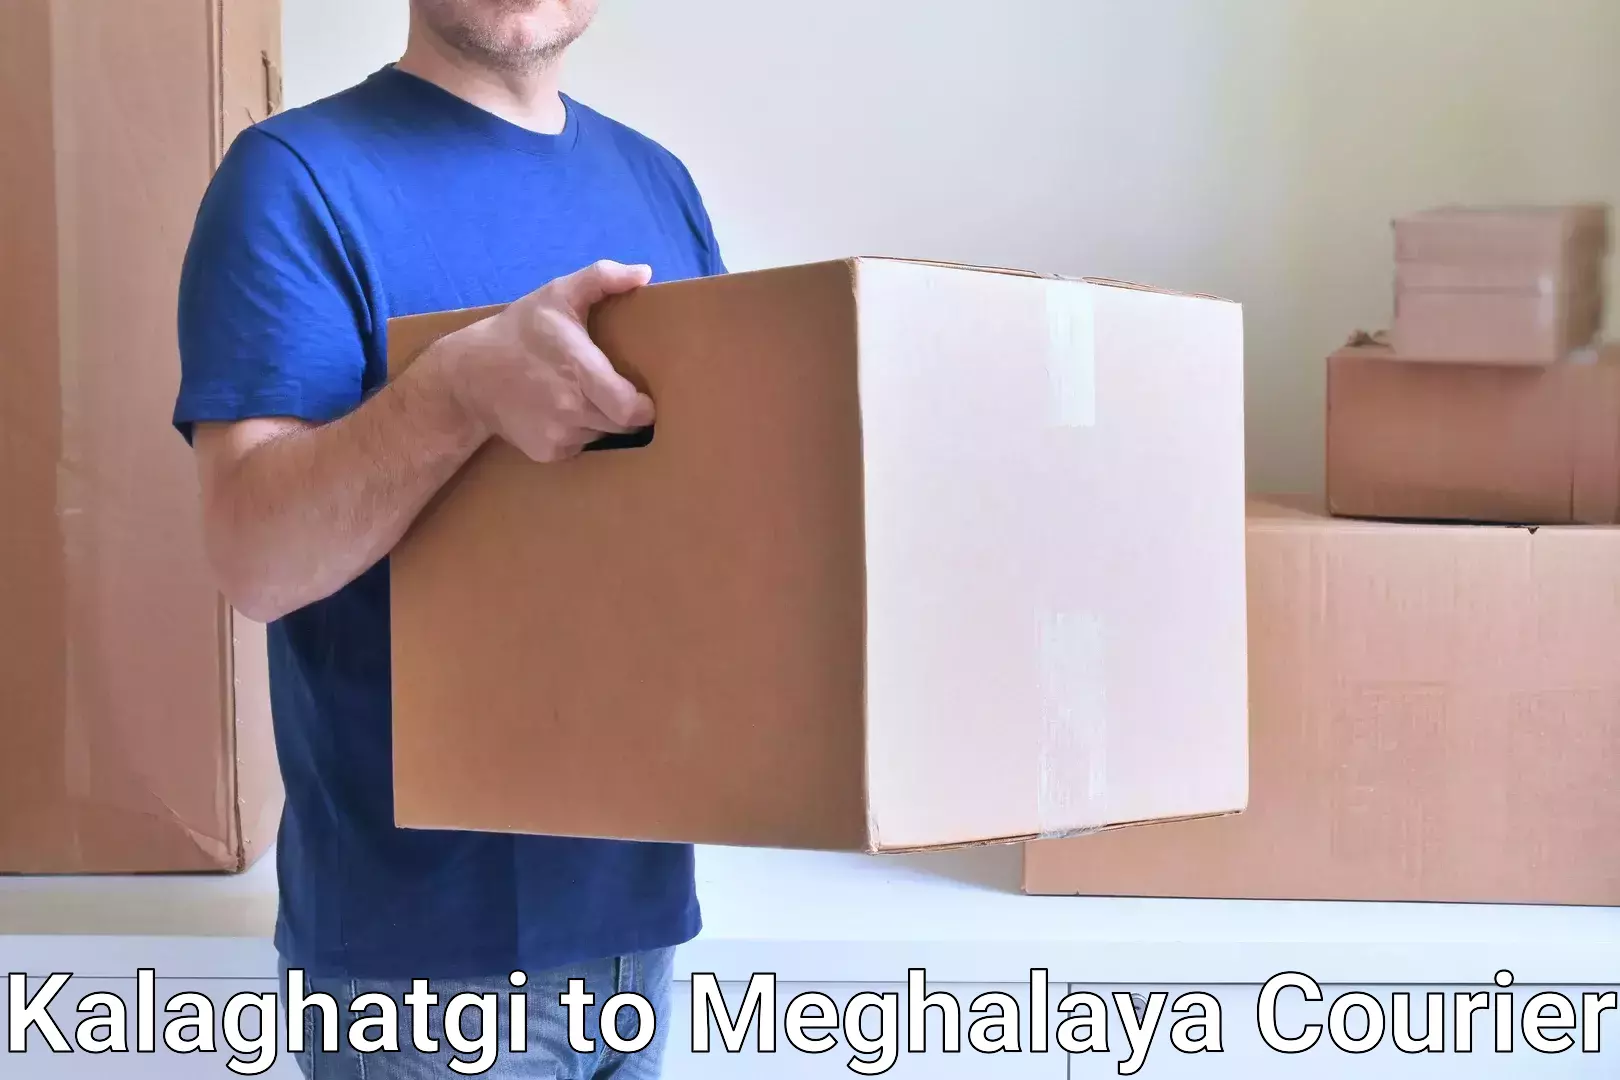 Courier service partnerships Kalaghatgi to Jowai